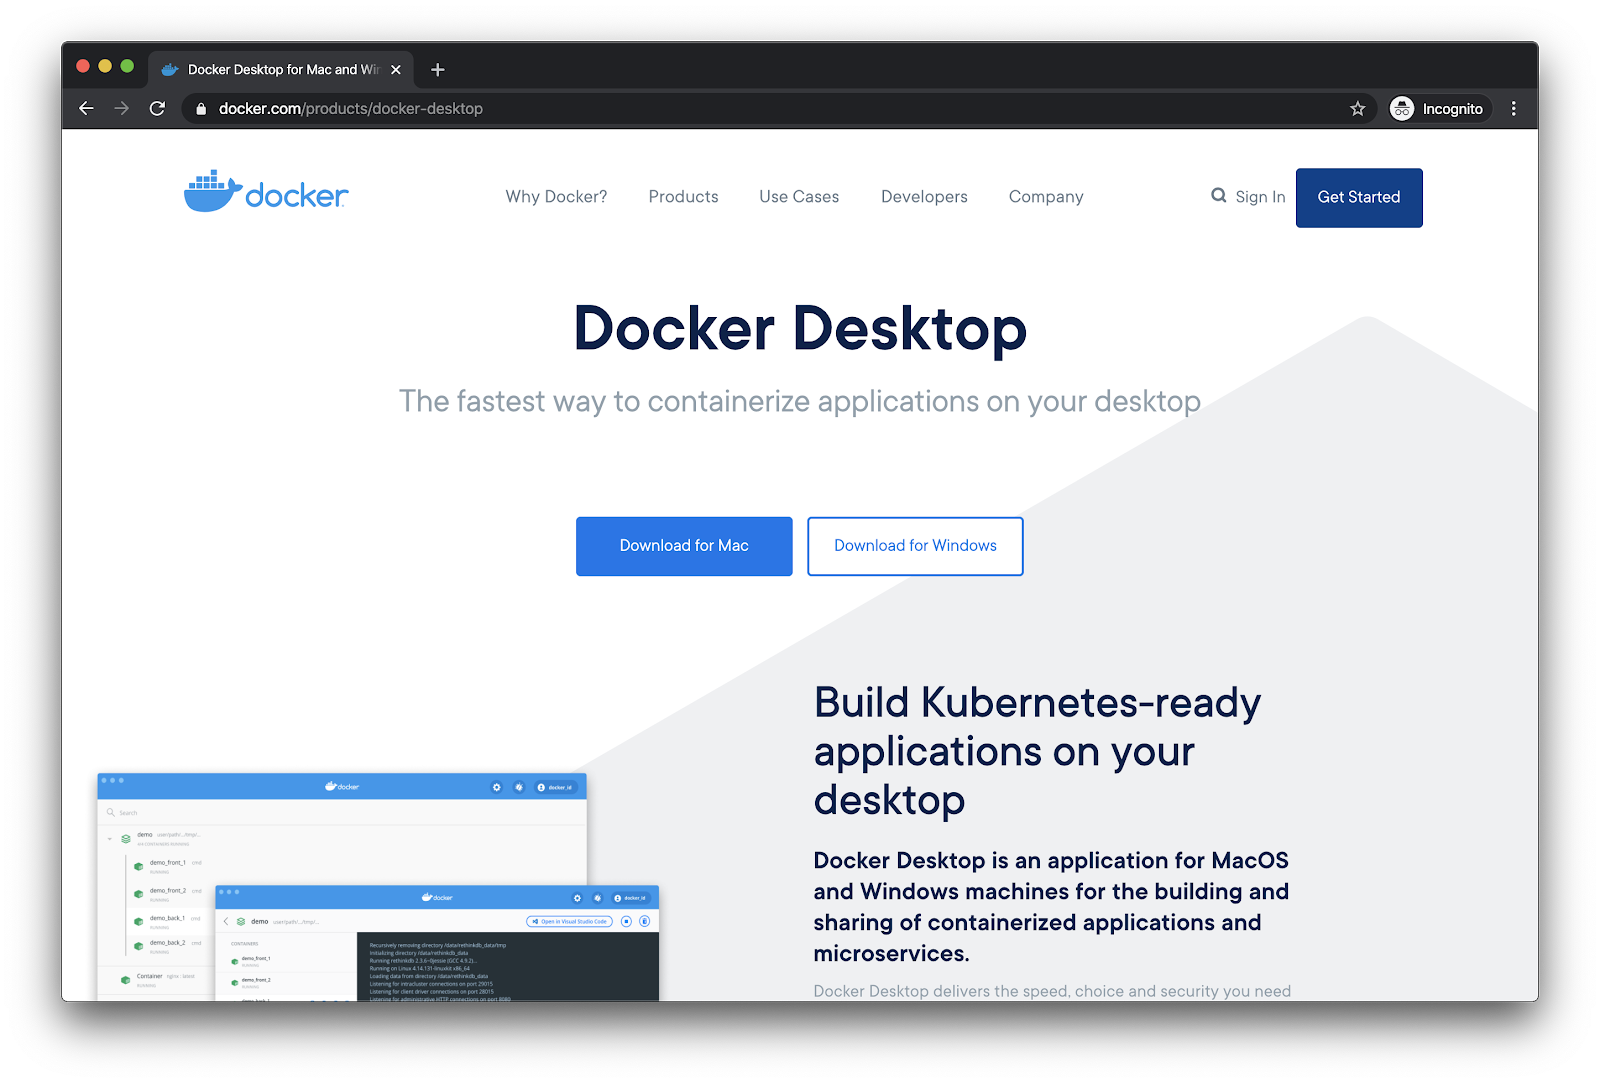 download docker hub for windows